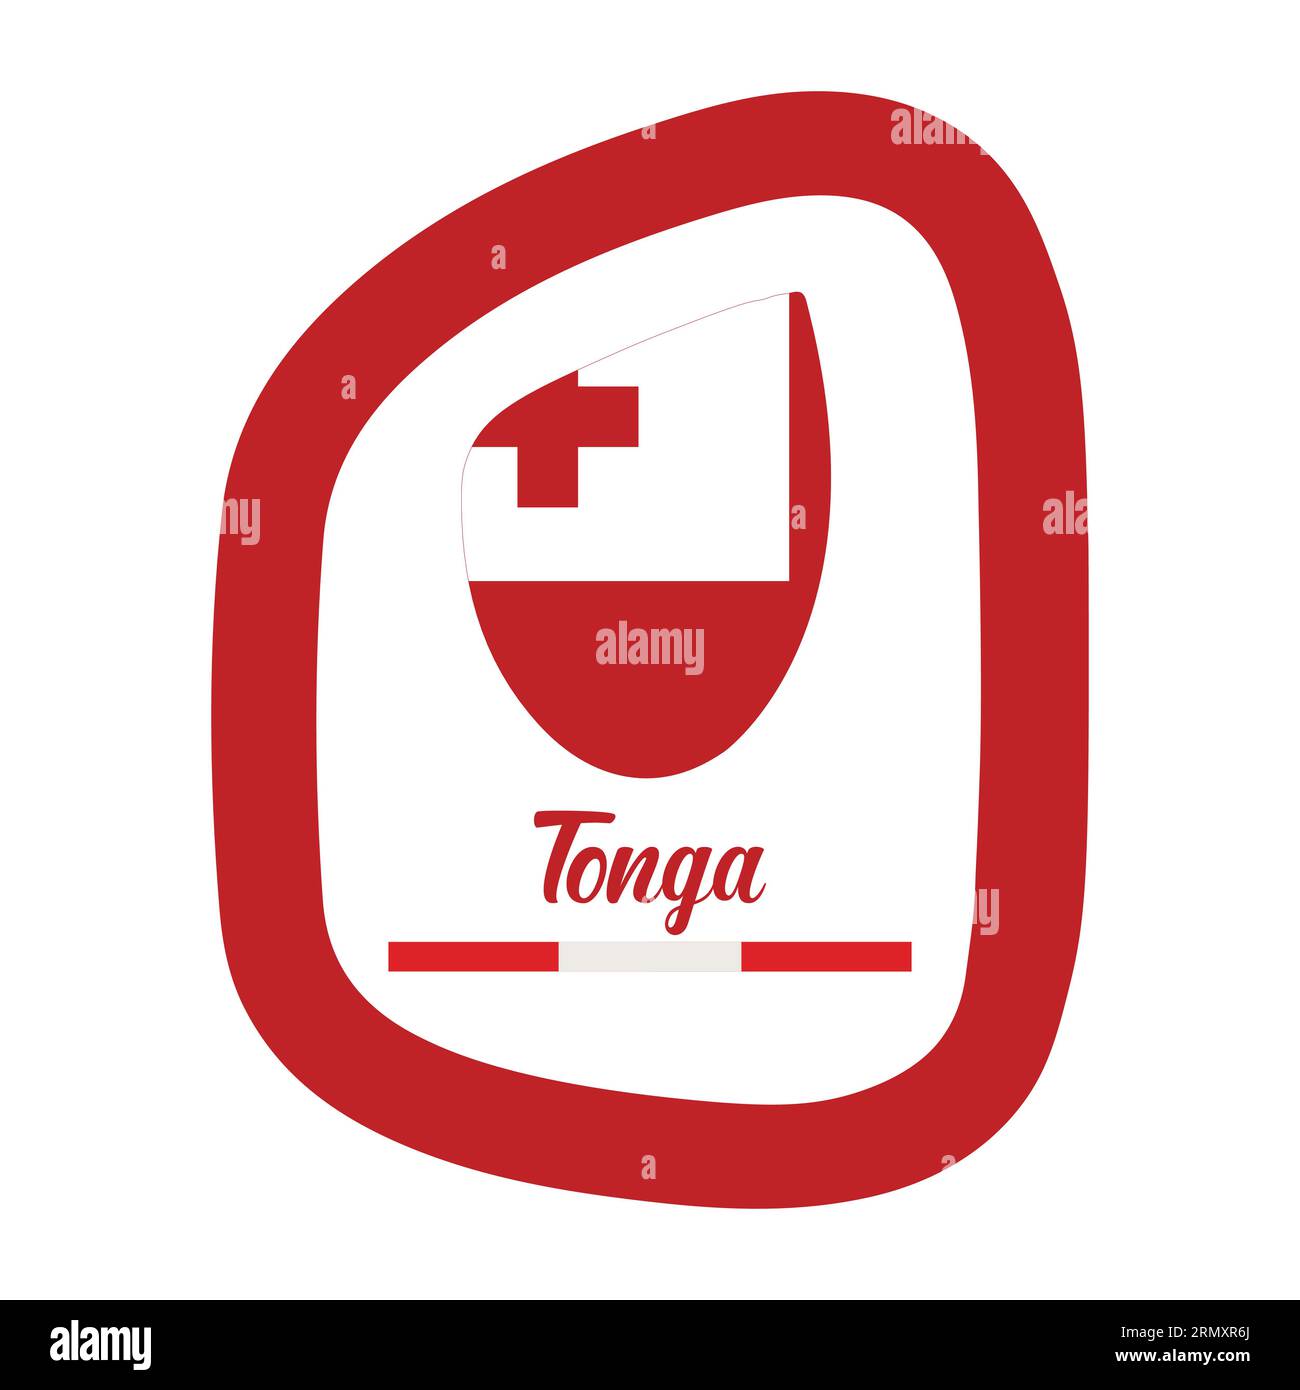 Tonga-Flagge mit Rahmen Vektor-Illustration abstraktes bearbeitbares Bild Stock Vektor